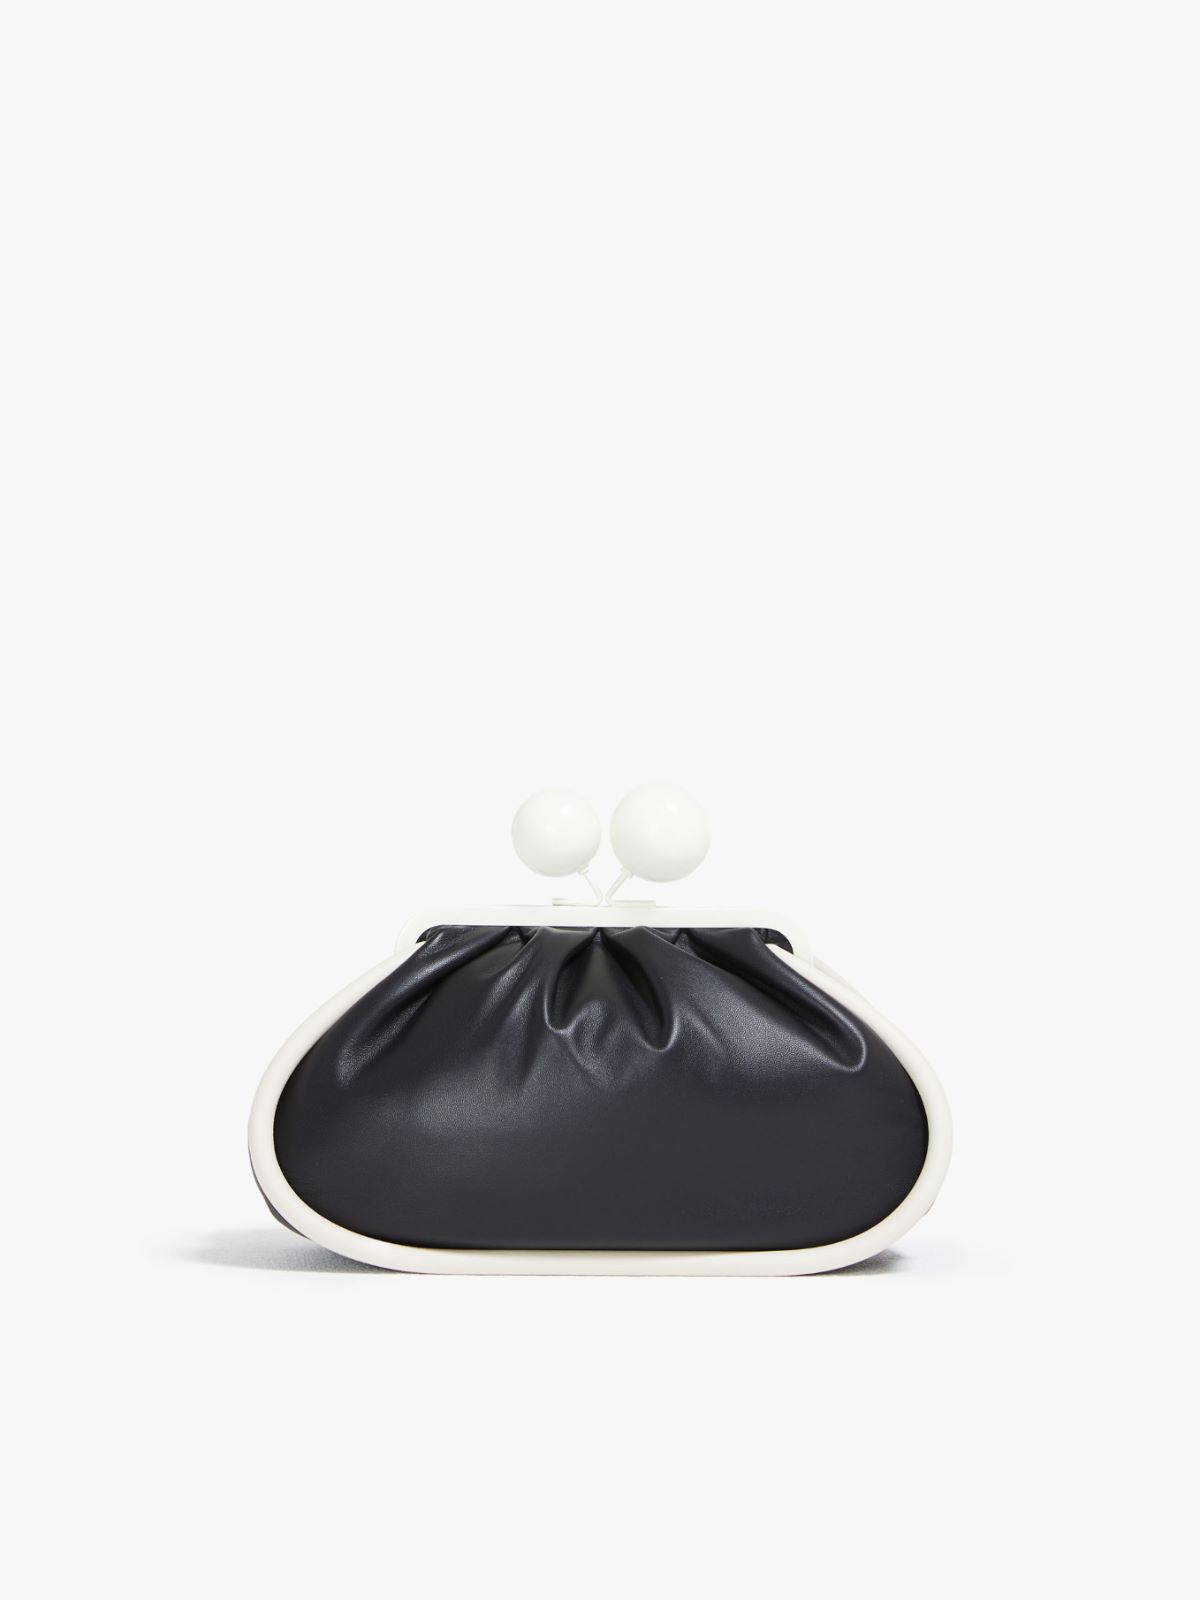 Medium Pasticcino Bag in nappa leather, black | Weekend Max Mara